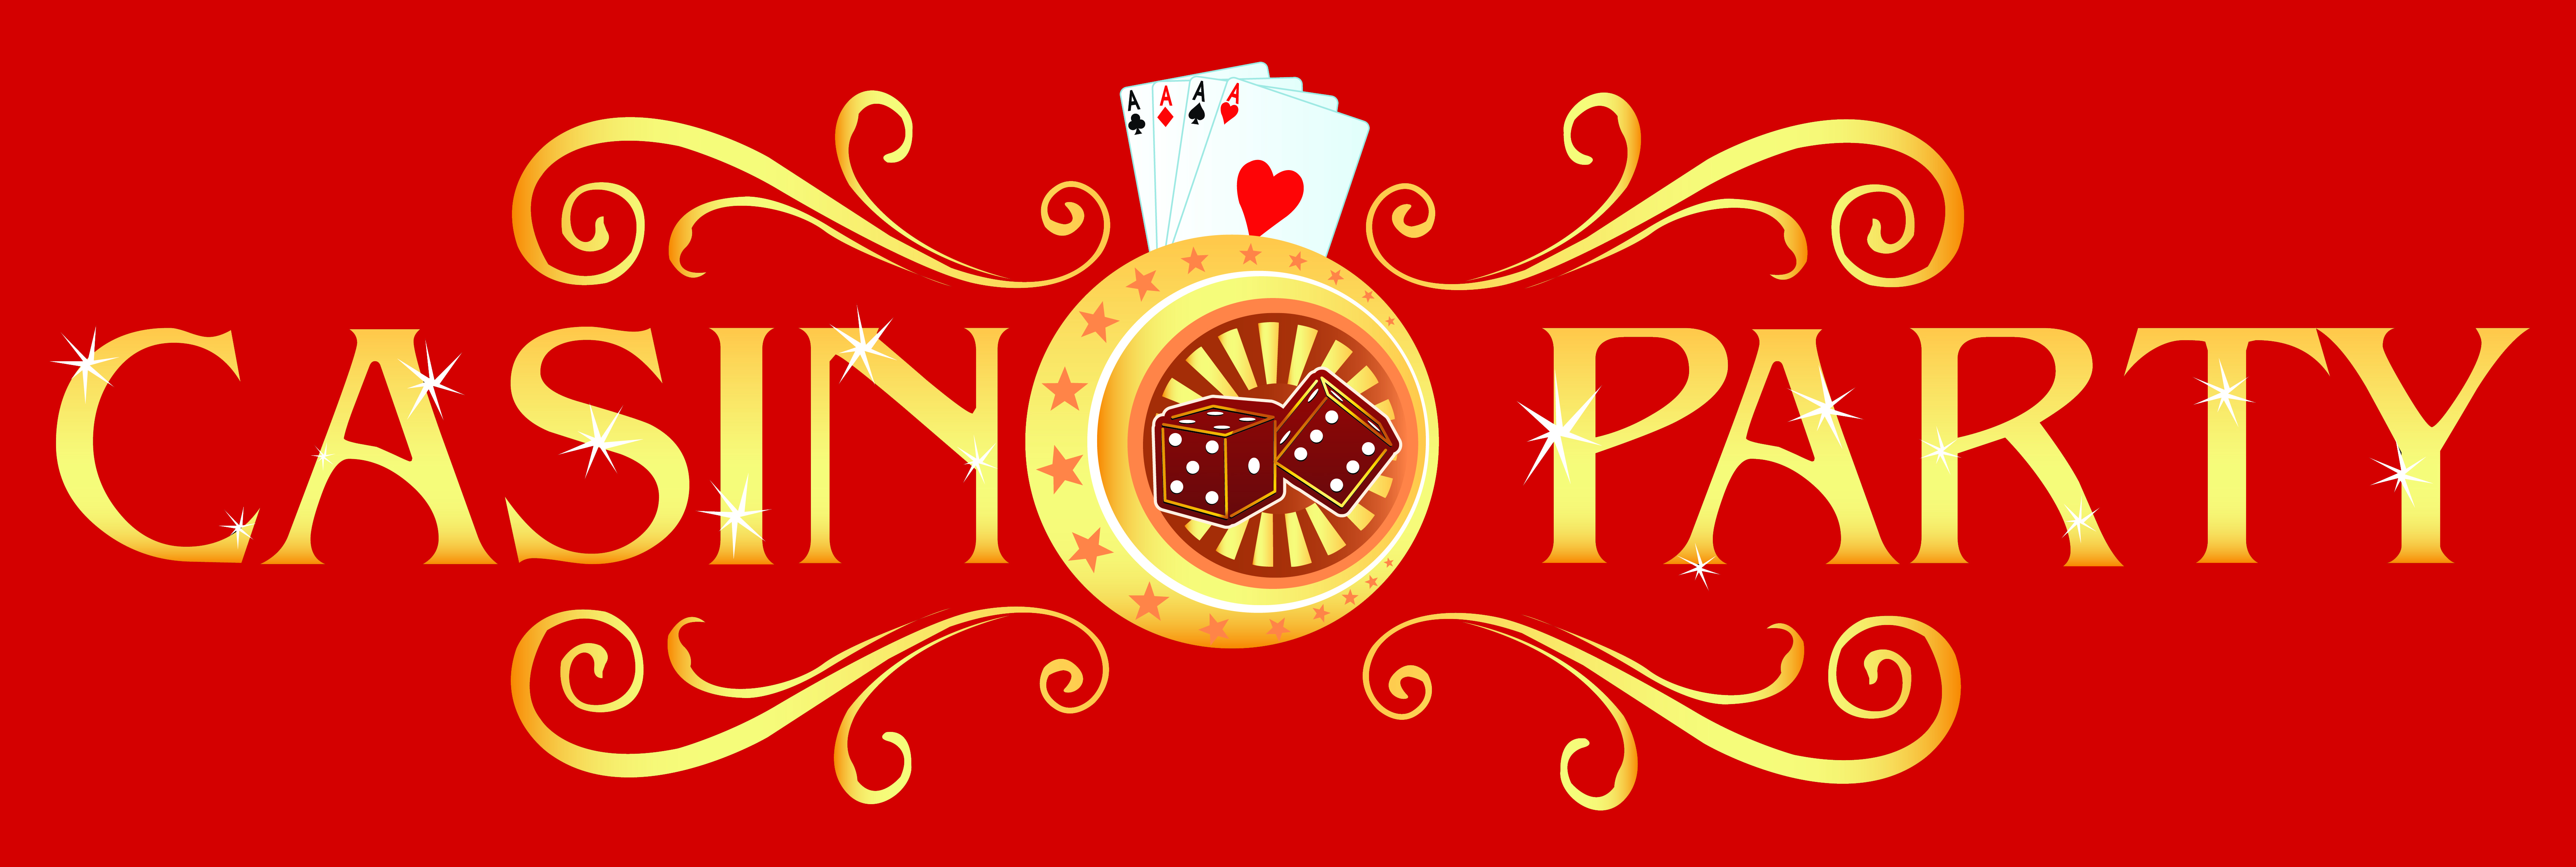 Party Casino logo. JTRJDA tghuq логотип. Q A logo Casino. Stake Casino logo. Ent casino сайт вход